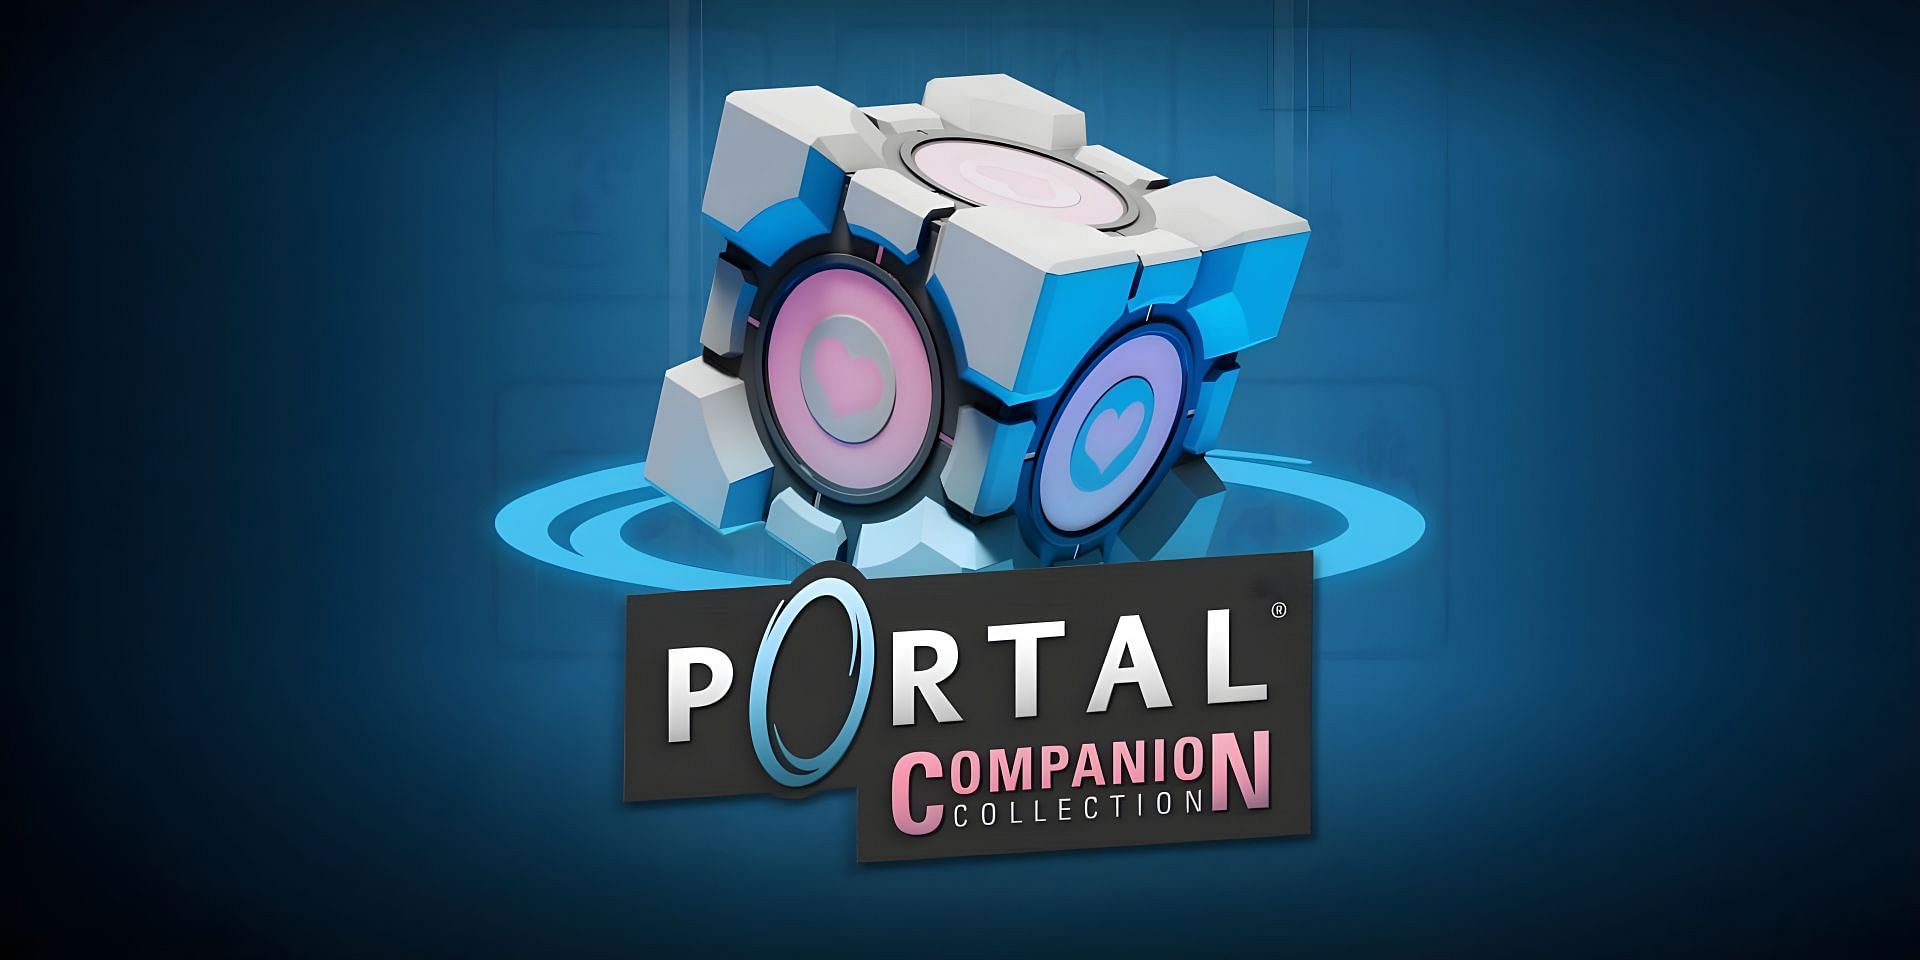 A Portal compilation is arriving for Nintendo&#039;s handheld console (Image via Valve)